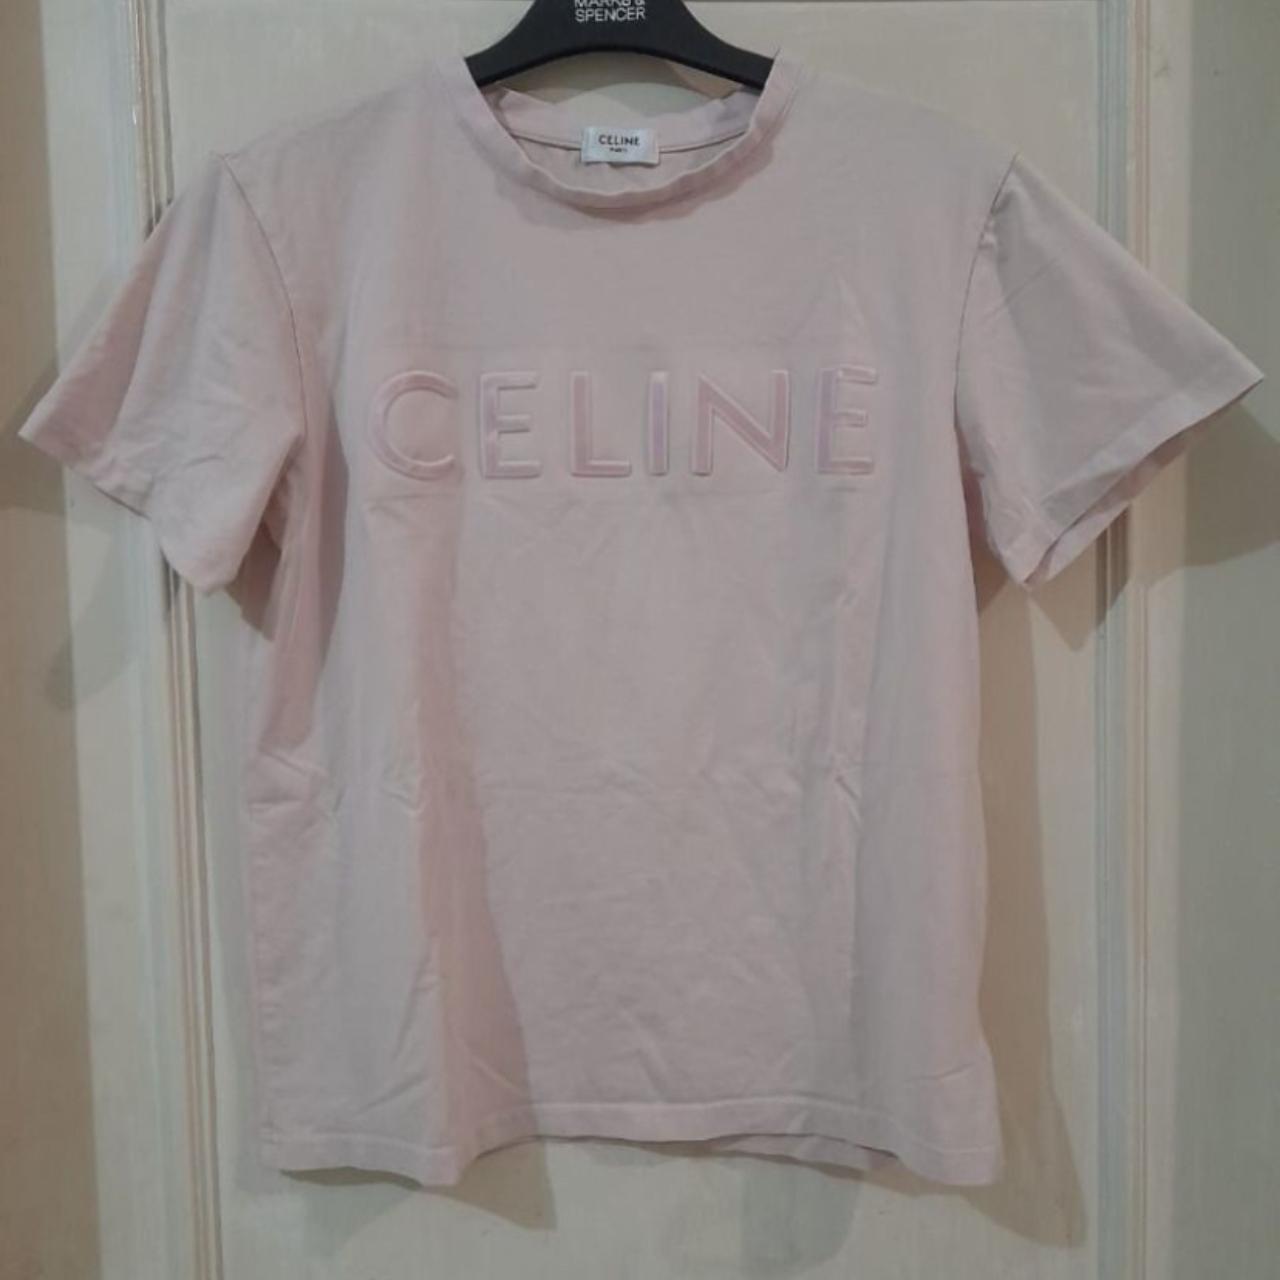 Celine cropped top size small #celine #croppedtop - Depop